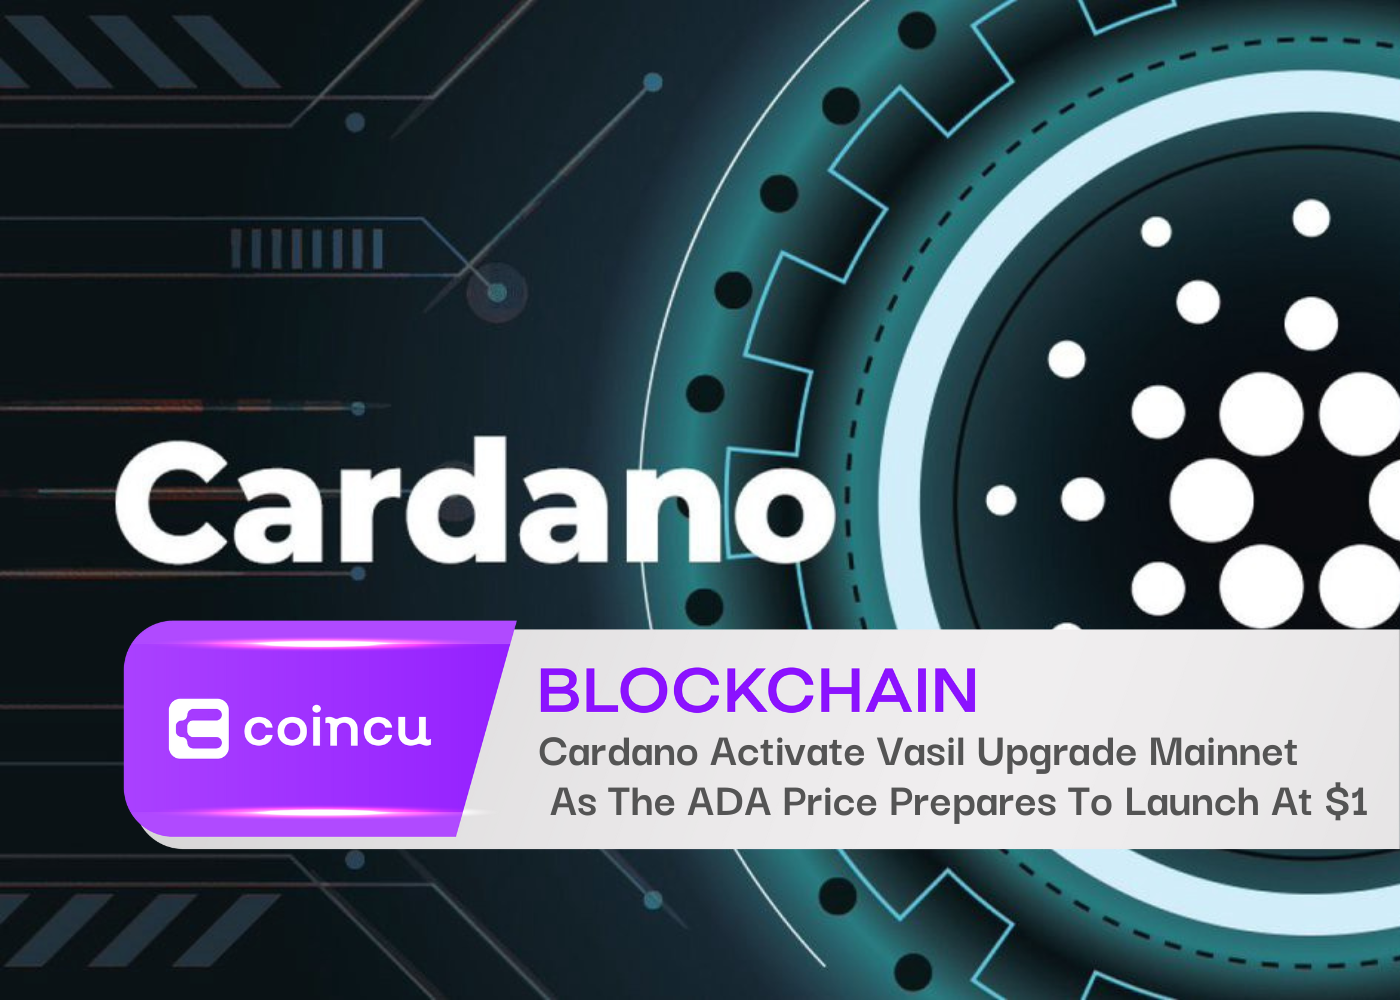 Cardano Activate Vasil Upgrade On The Mainnet